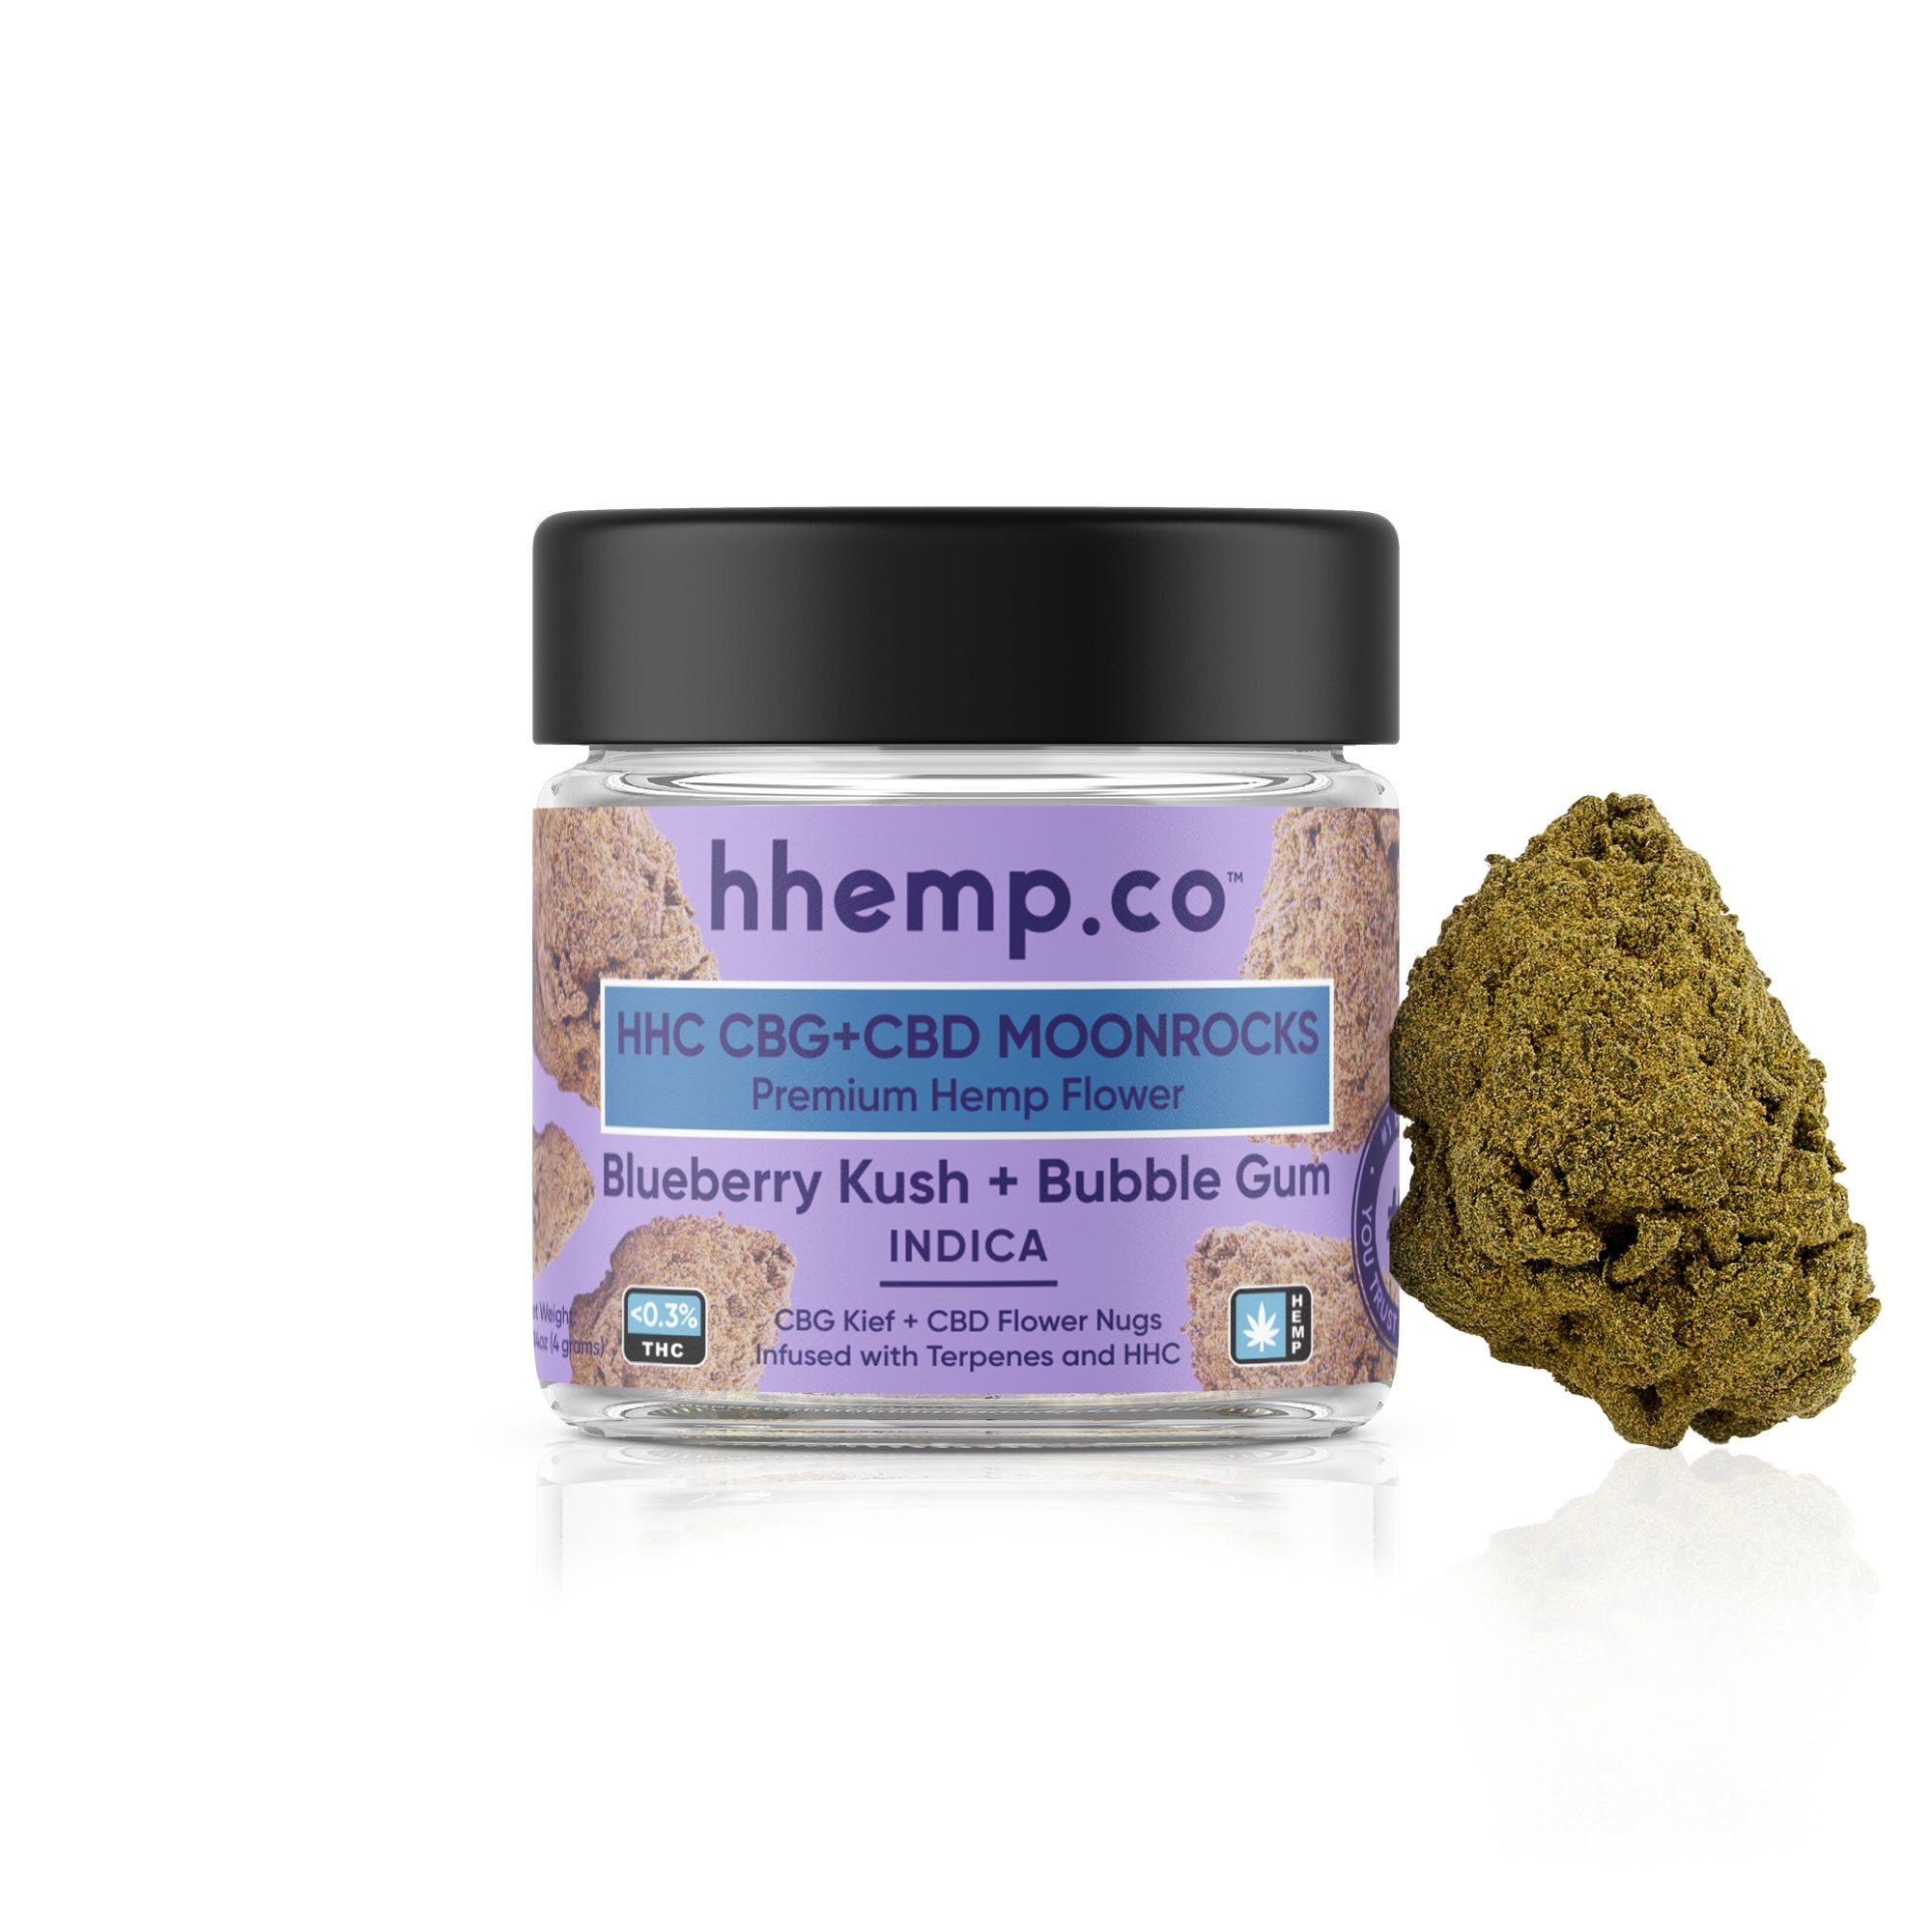 hhemp.co HHC Moonrock Flower - Blueberry Kush+Bubble Gum (INDICA)